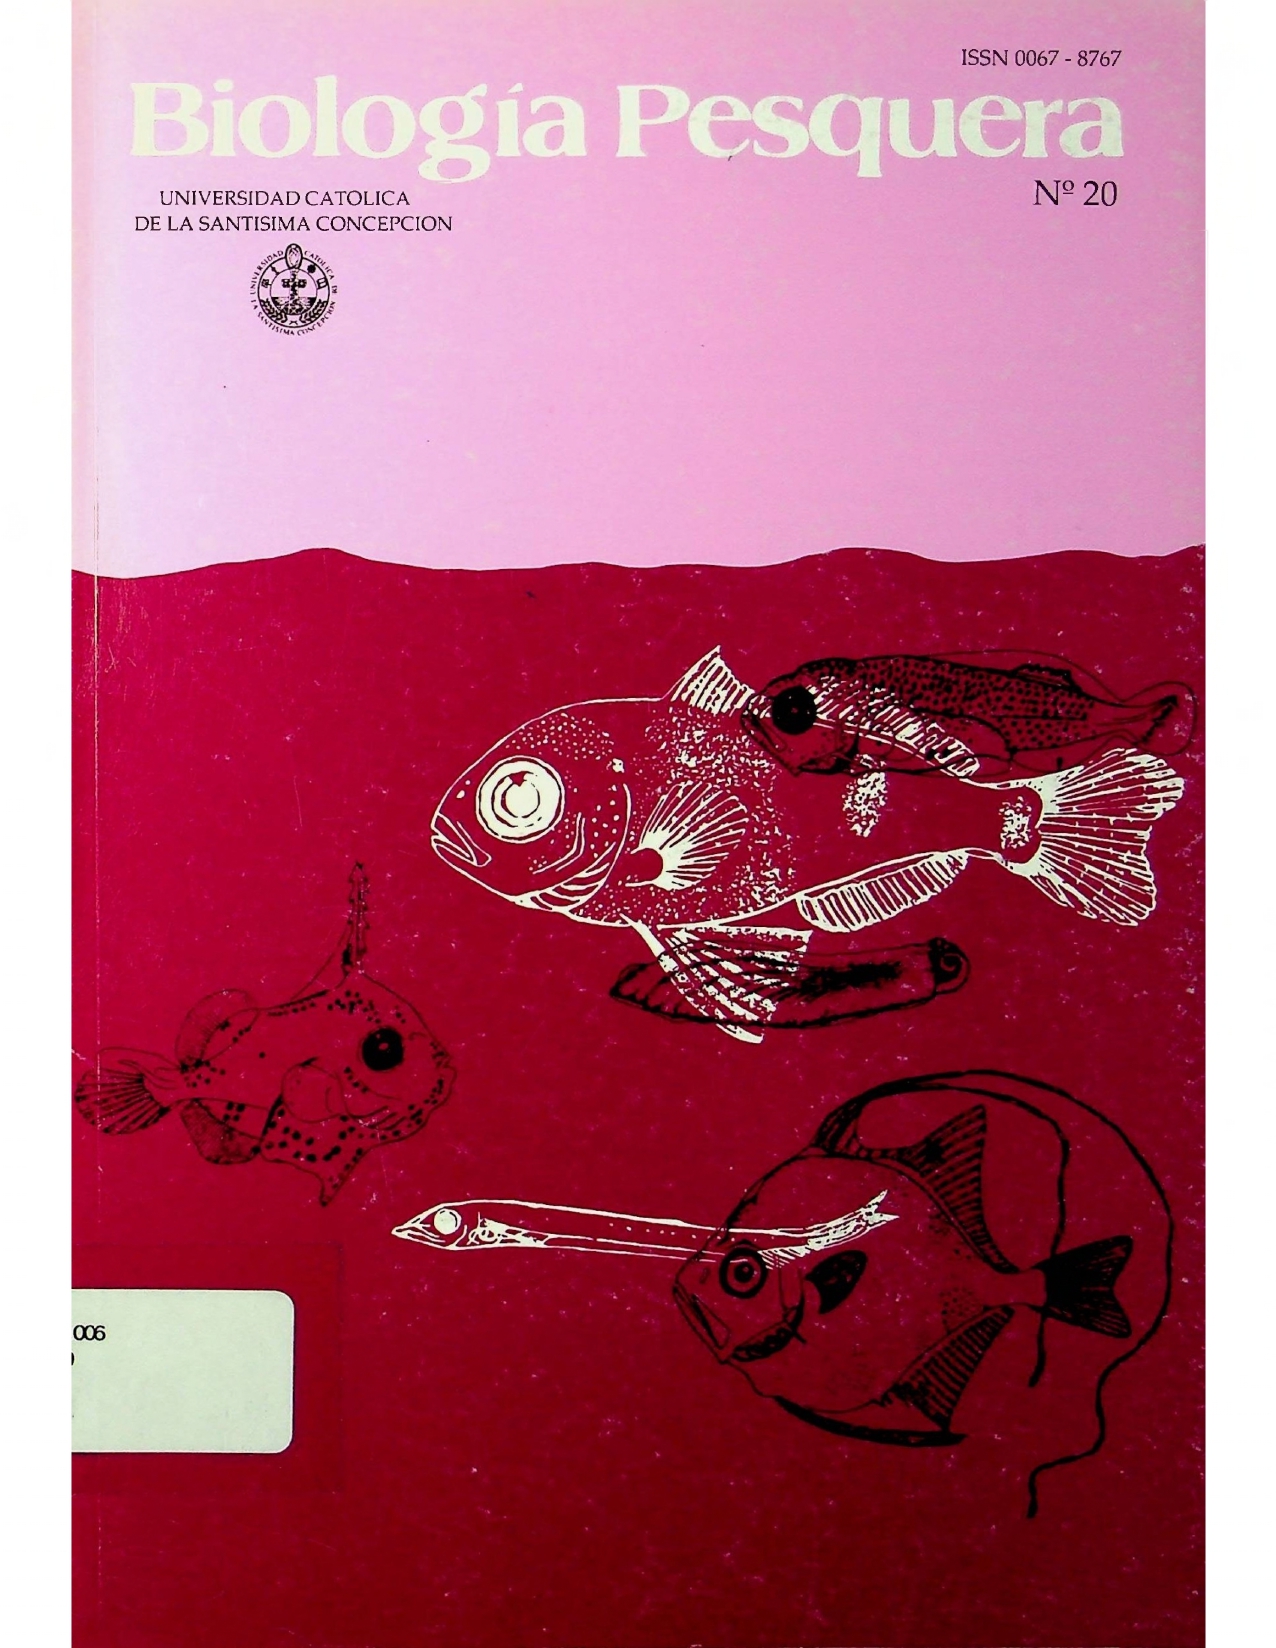 					Ver Núm. 20 (1991): Biología Pesquera
				